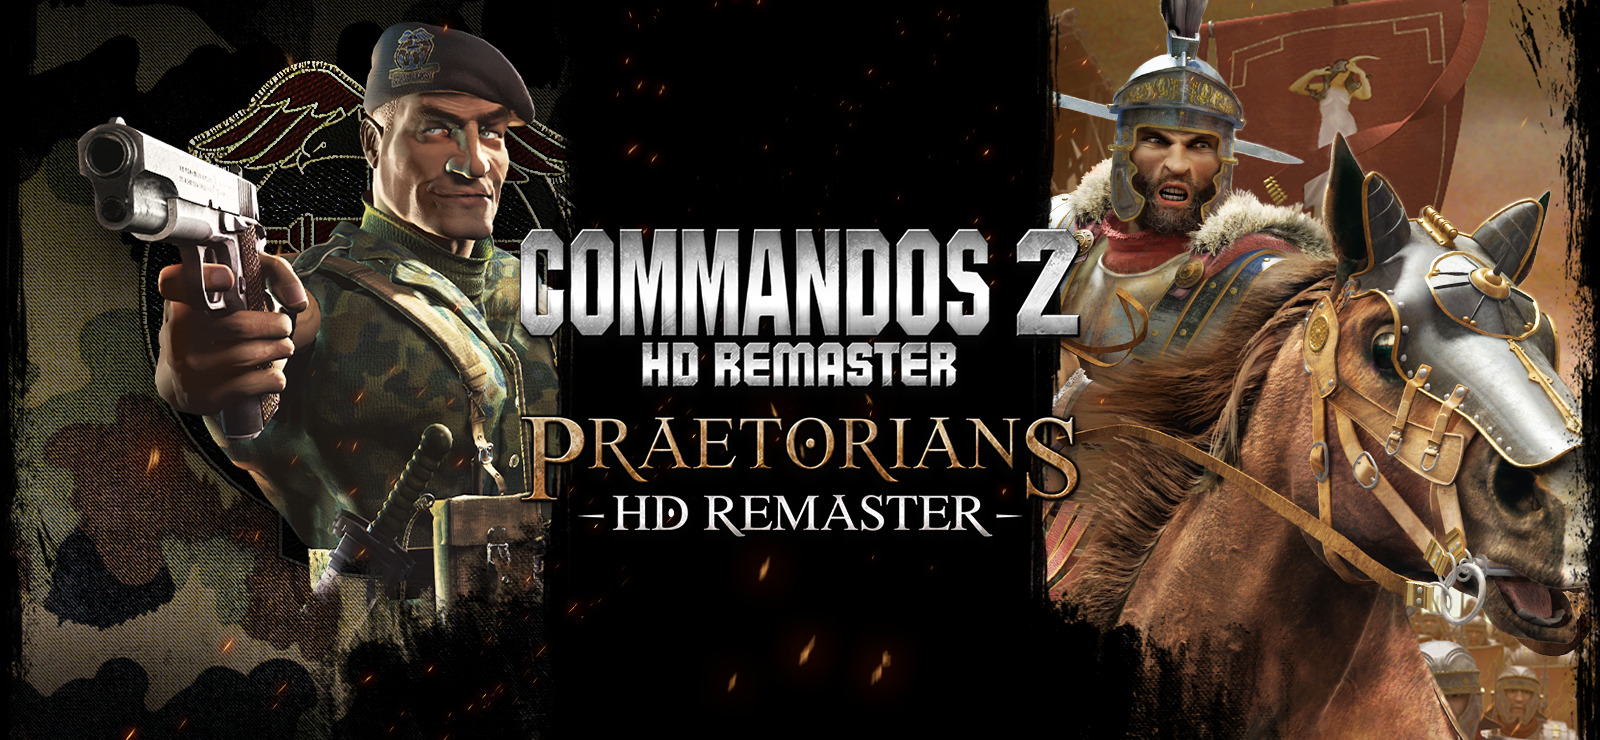 Steam commandos 2 hd remaster фото 54